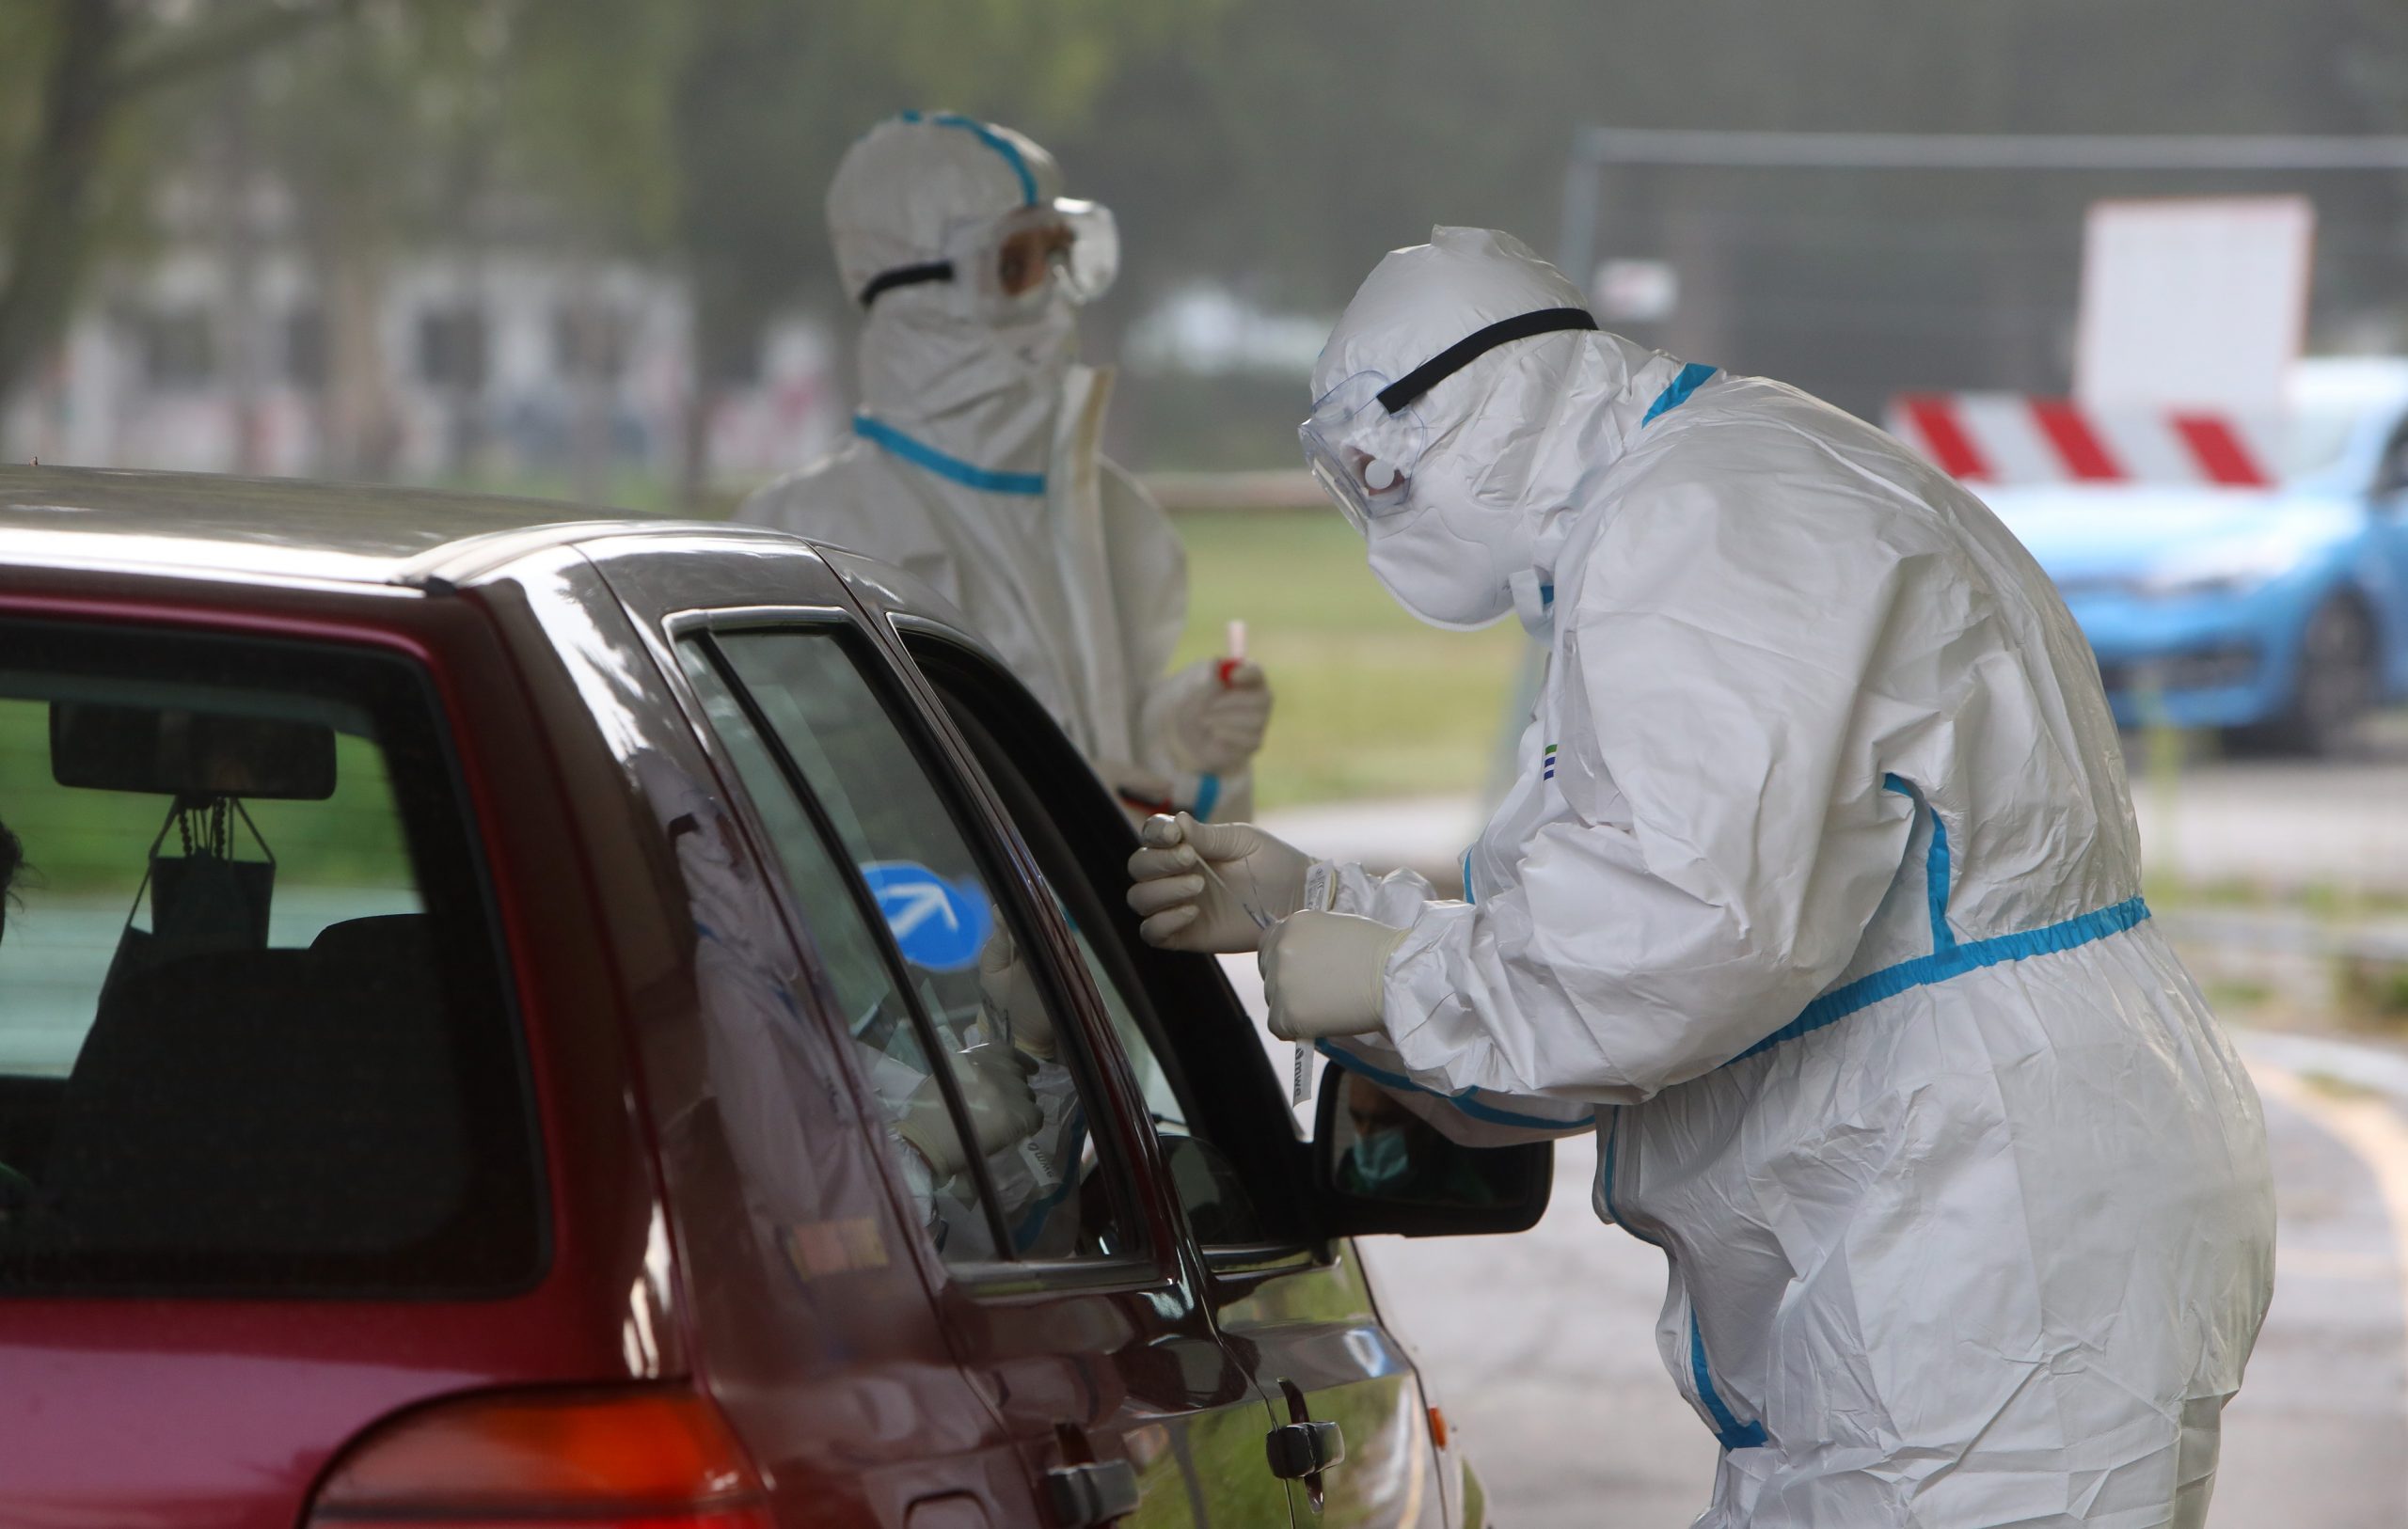 24.08.2021., Karlovac - Guzva na testiranju za koronavirus na drive-in lokaciji u Luscicu.
Photo: Kristina Stedul Fabac/PIXSELL